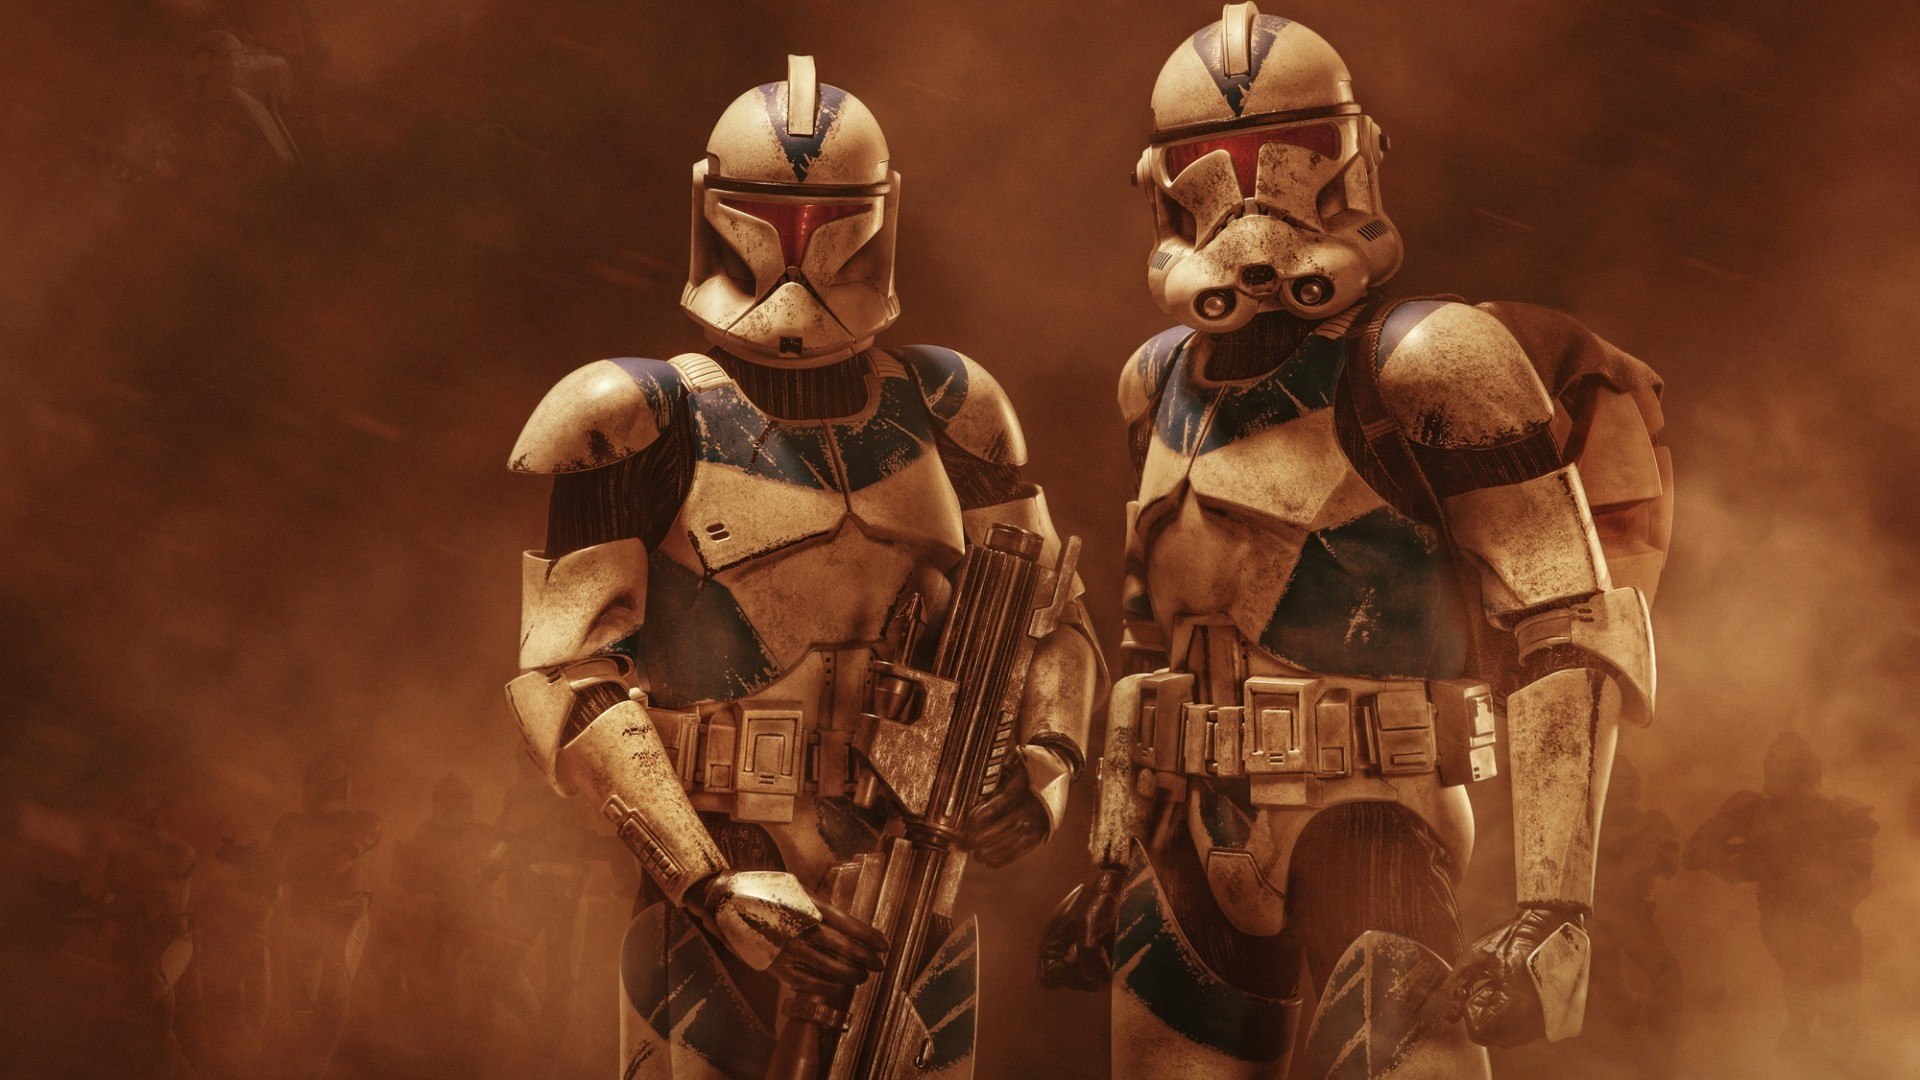 Imperial stormtroopers in Star Wars Desktop wallpaper 1920x1080